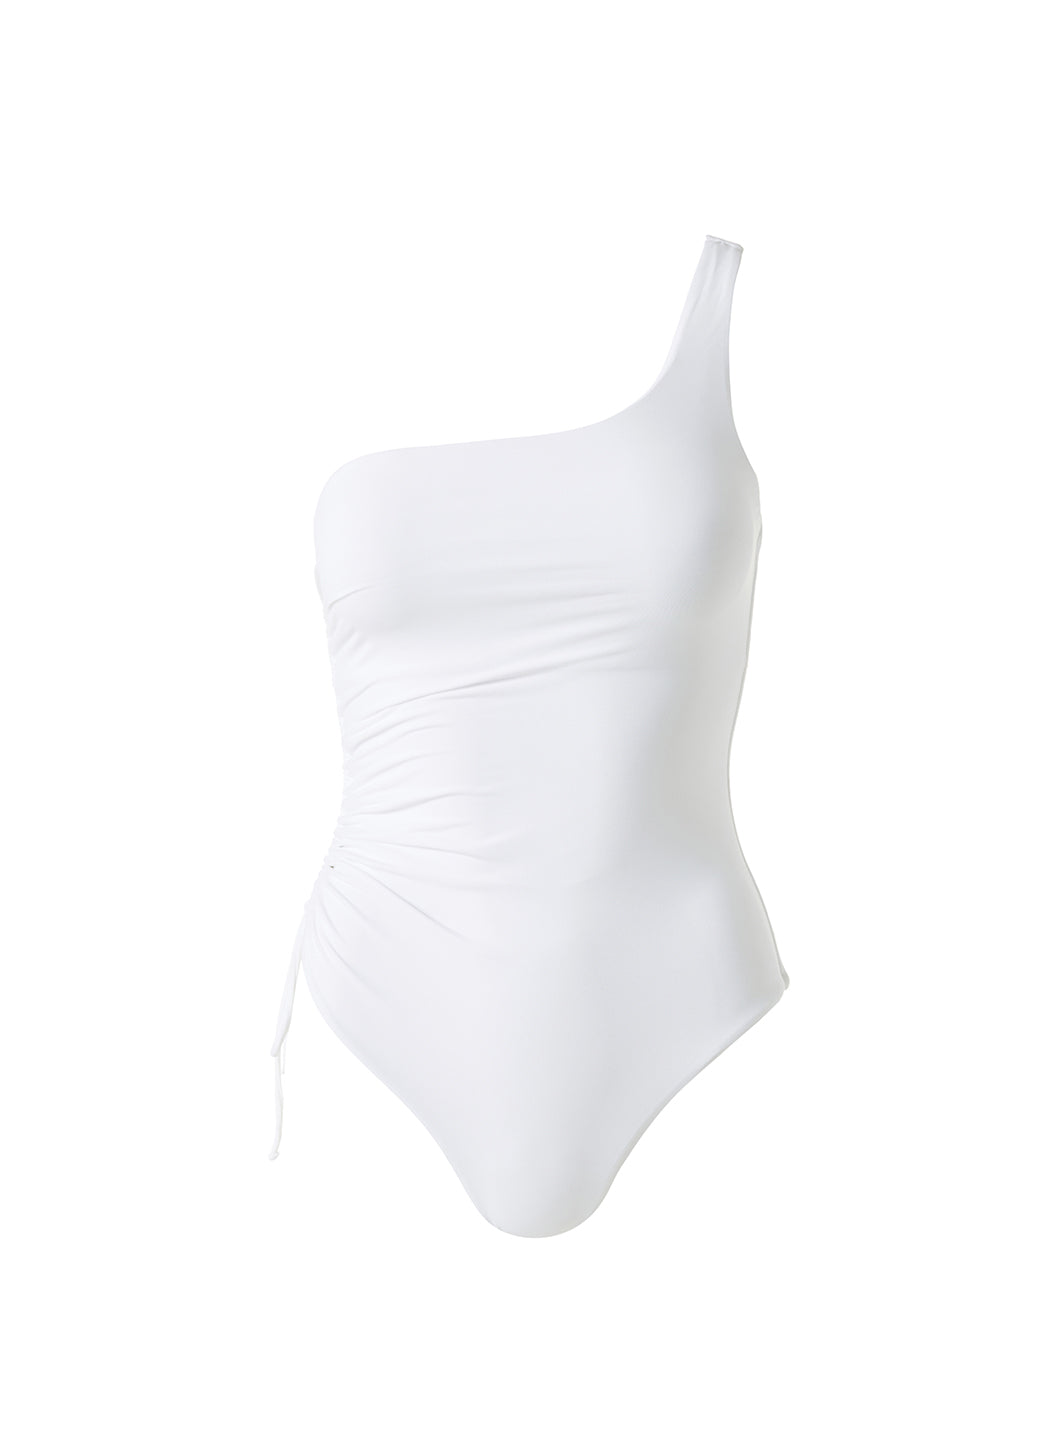 Bodrum White Swimsuit Cutouts_2023